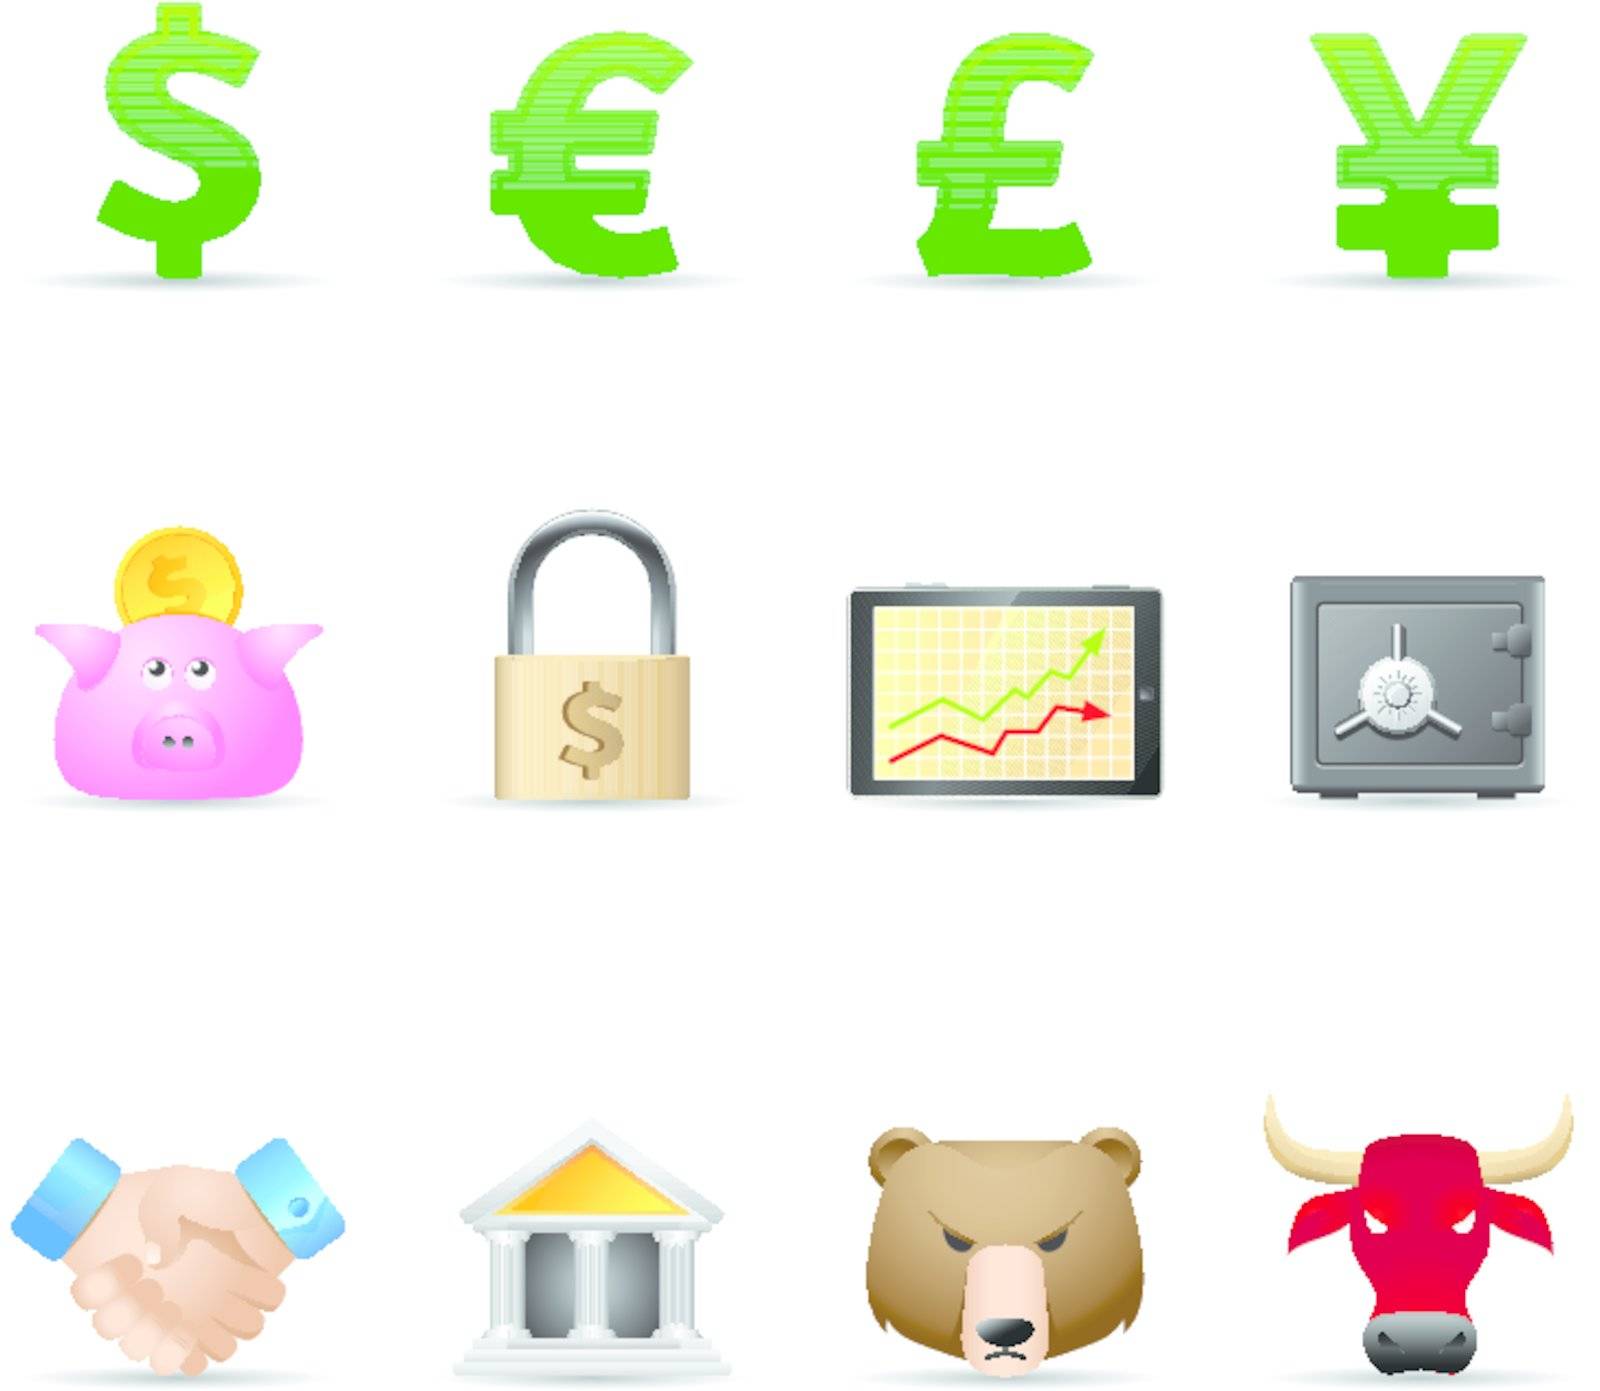 Web Icons - Finance by puruan